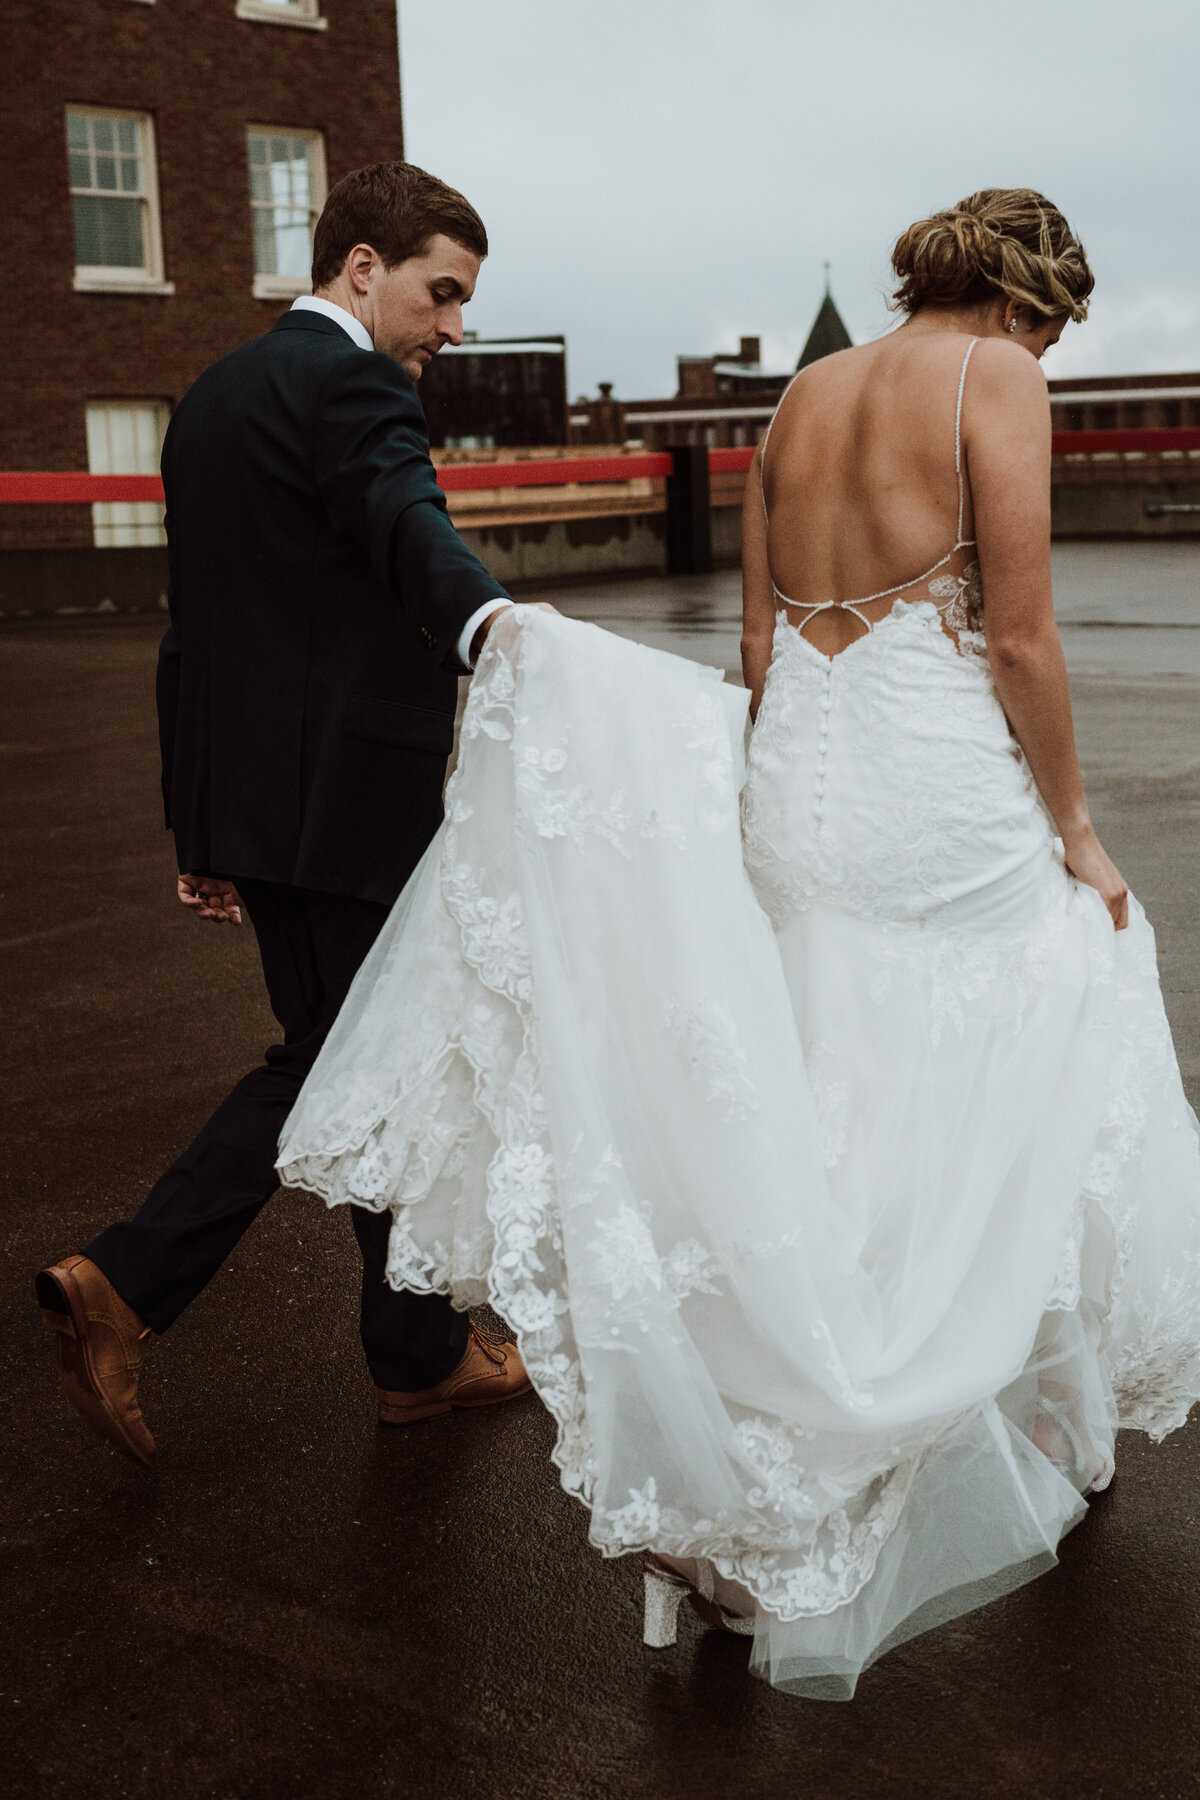 Groom walks with bride on rainy rooftop